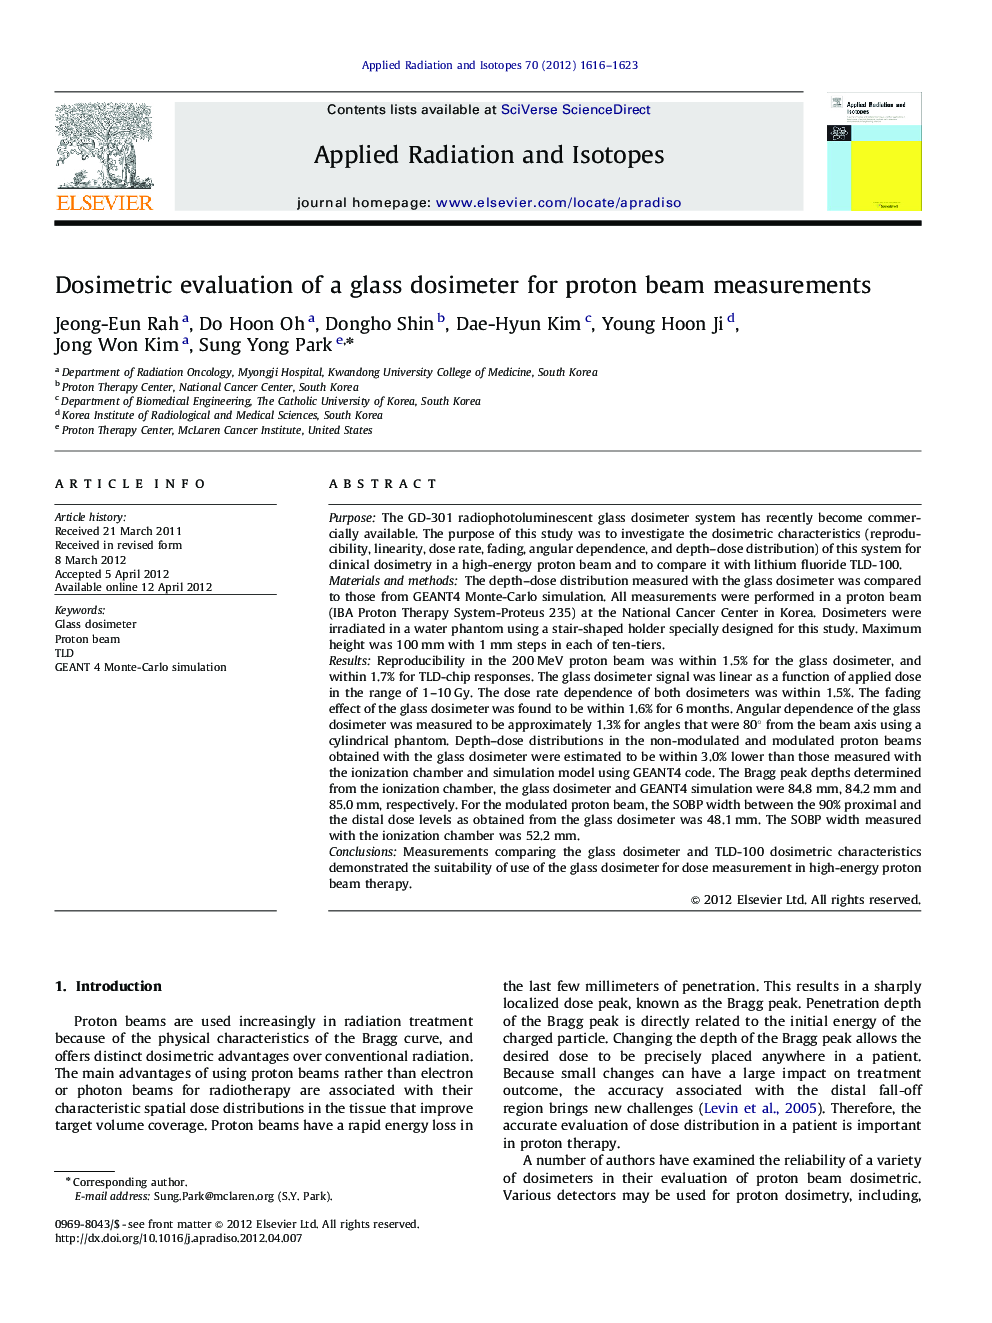 Dosimetric evaluation of a glass dosimeter for proton beam measurements